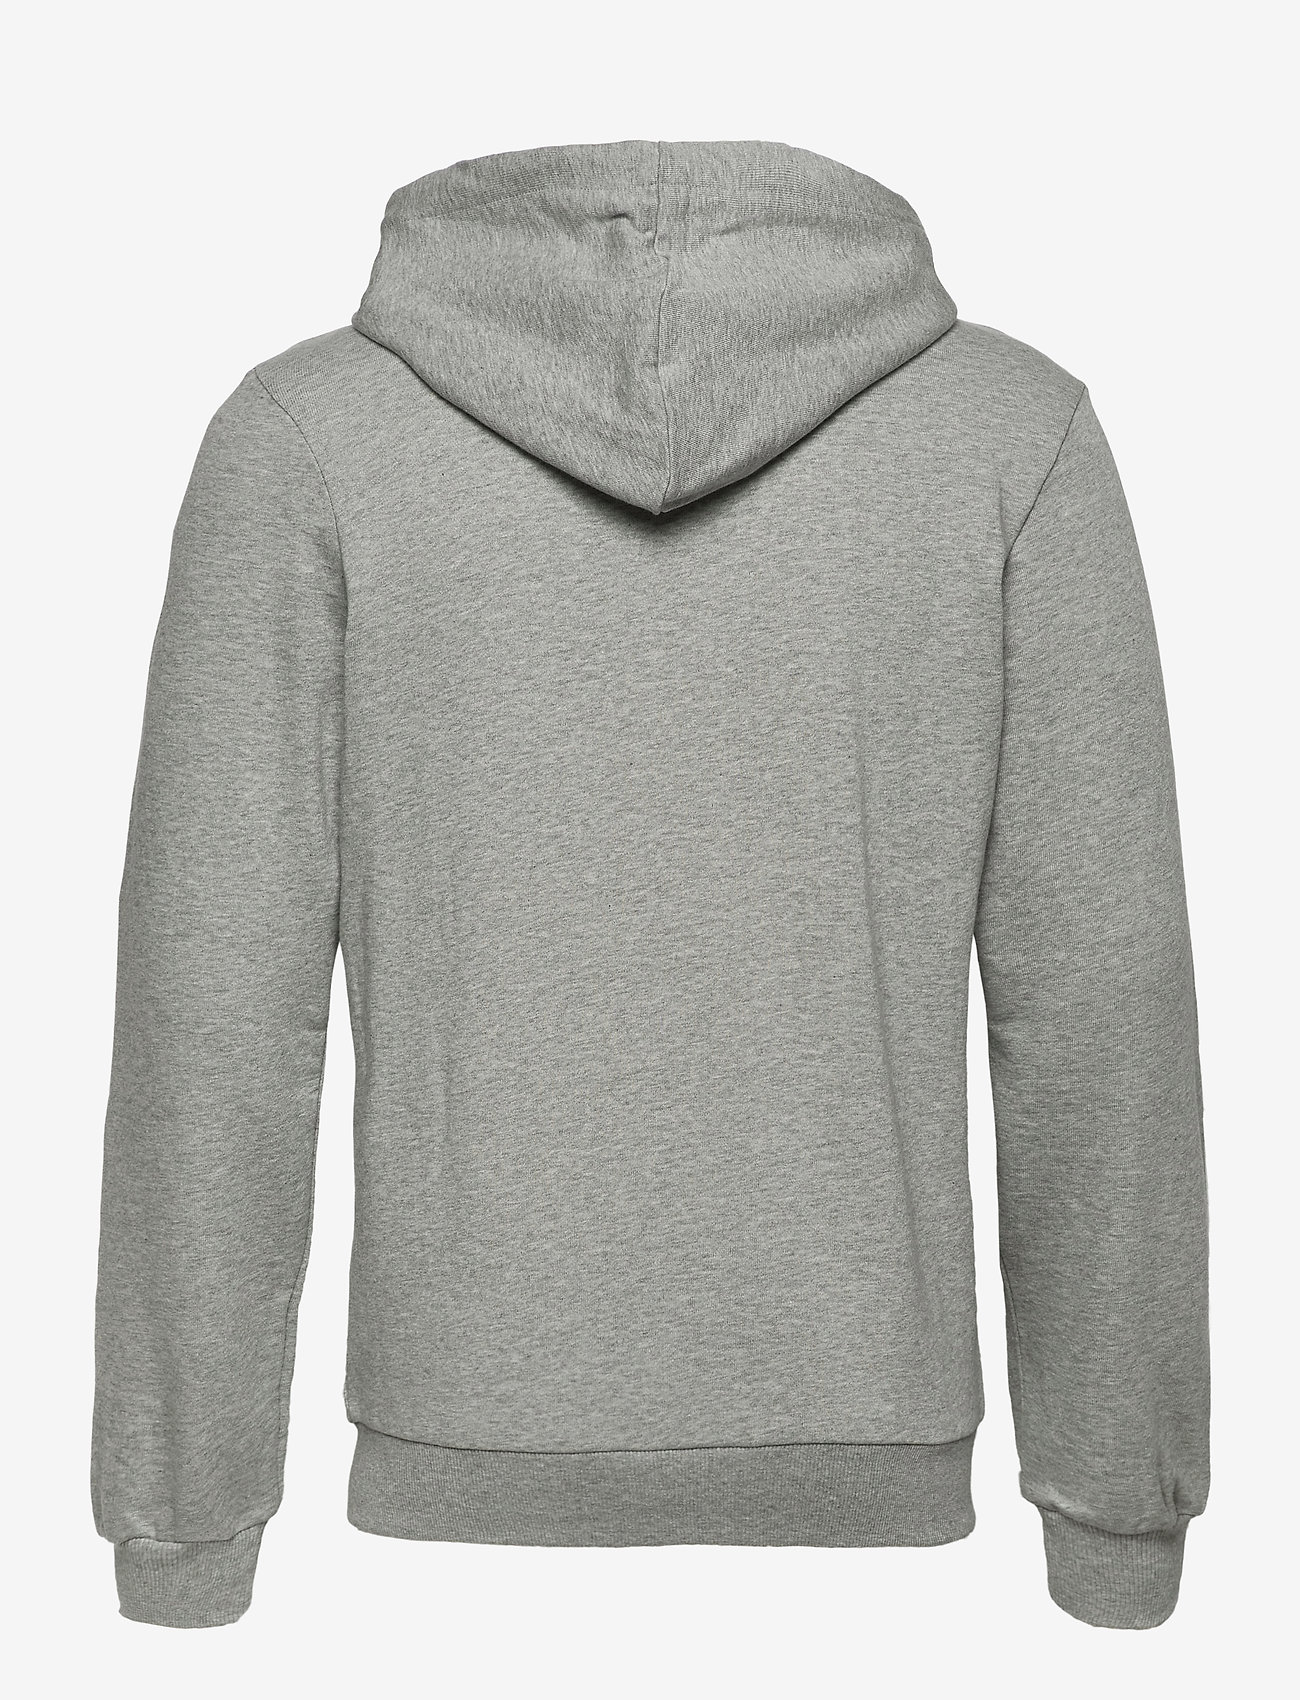 Knowledge Cotton Apparel - Knowledge hood zip sweat - GOTS/Veg - truien en hoodies - grey melange - 1